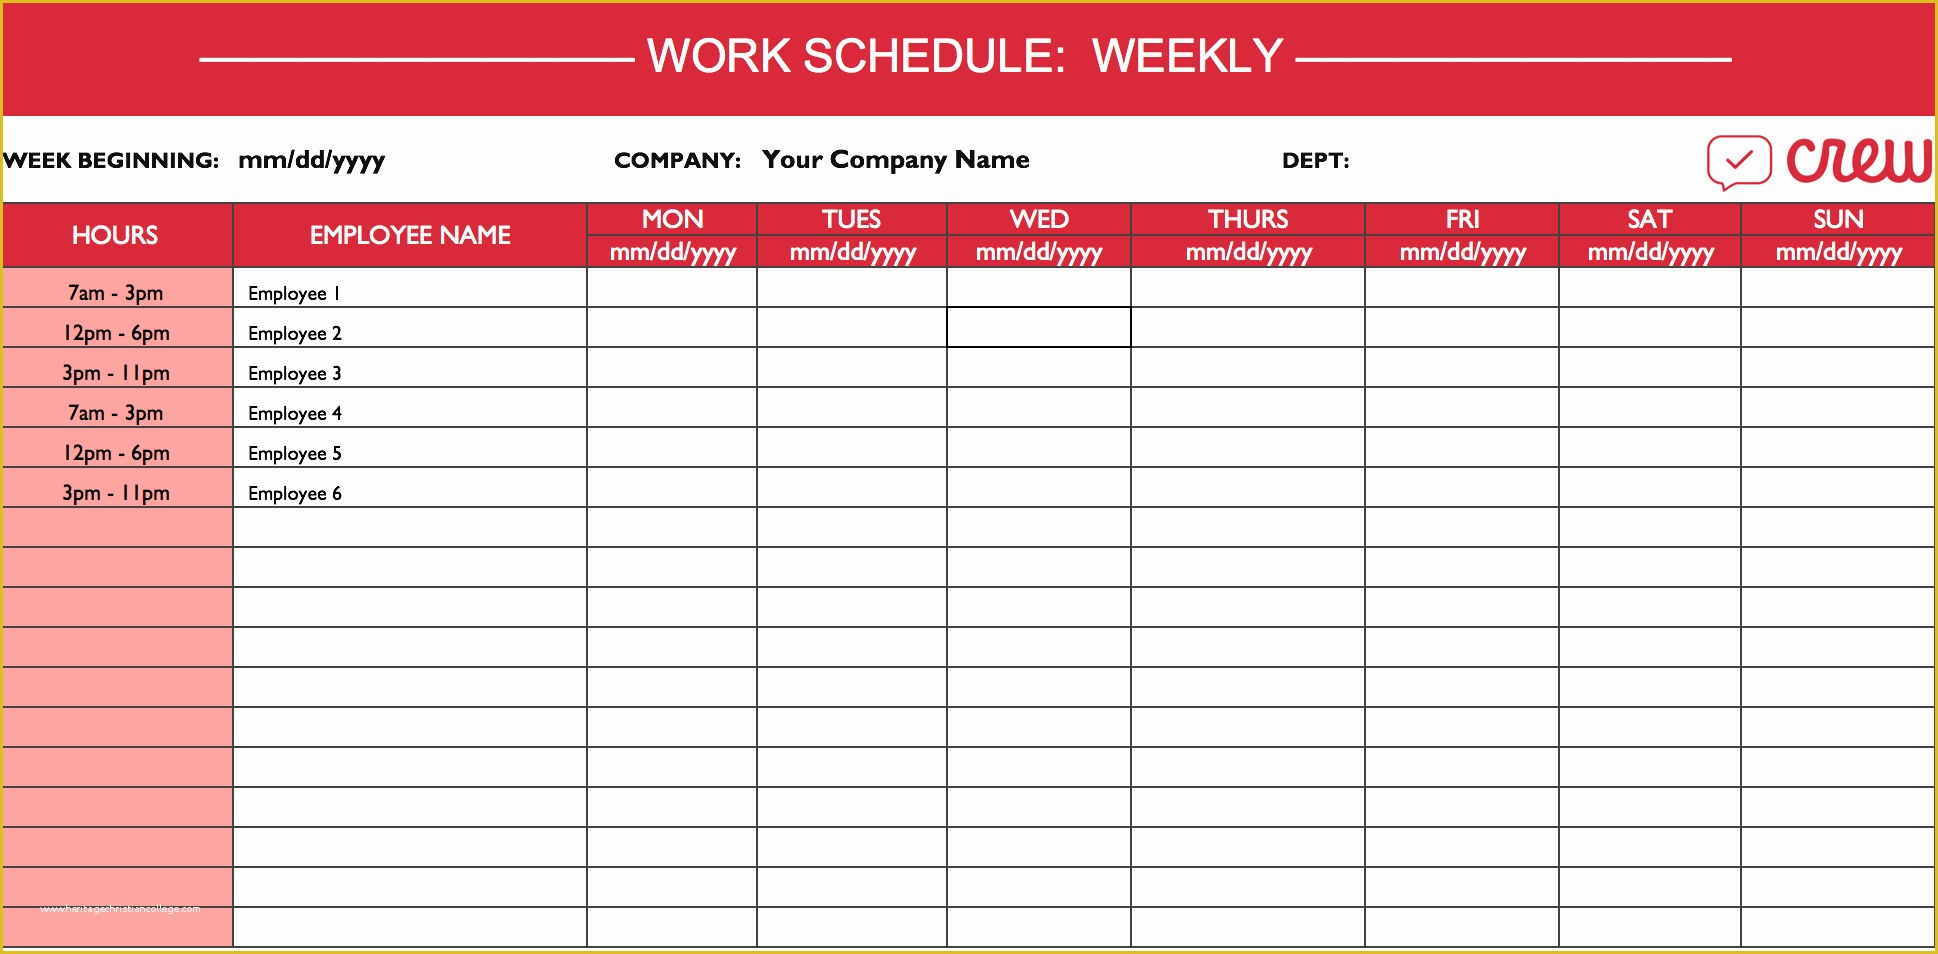 Excel Work Schedule Template Free Of Weekly Work Schedule Template I Crew